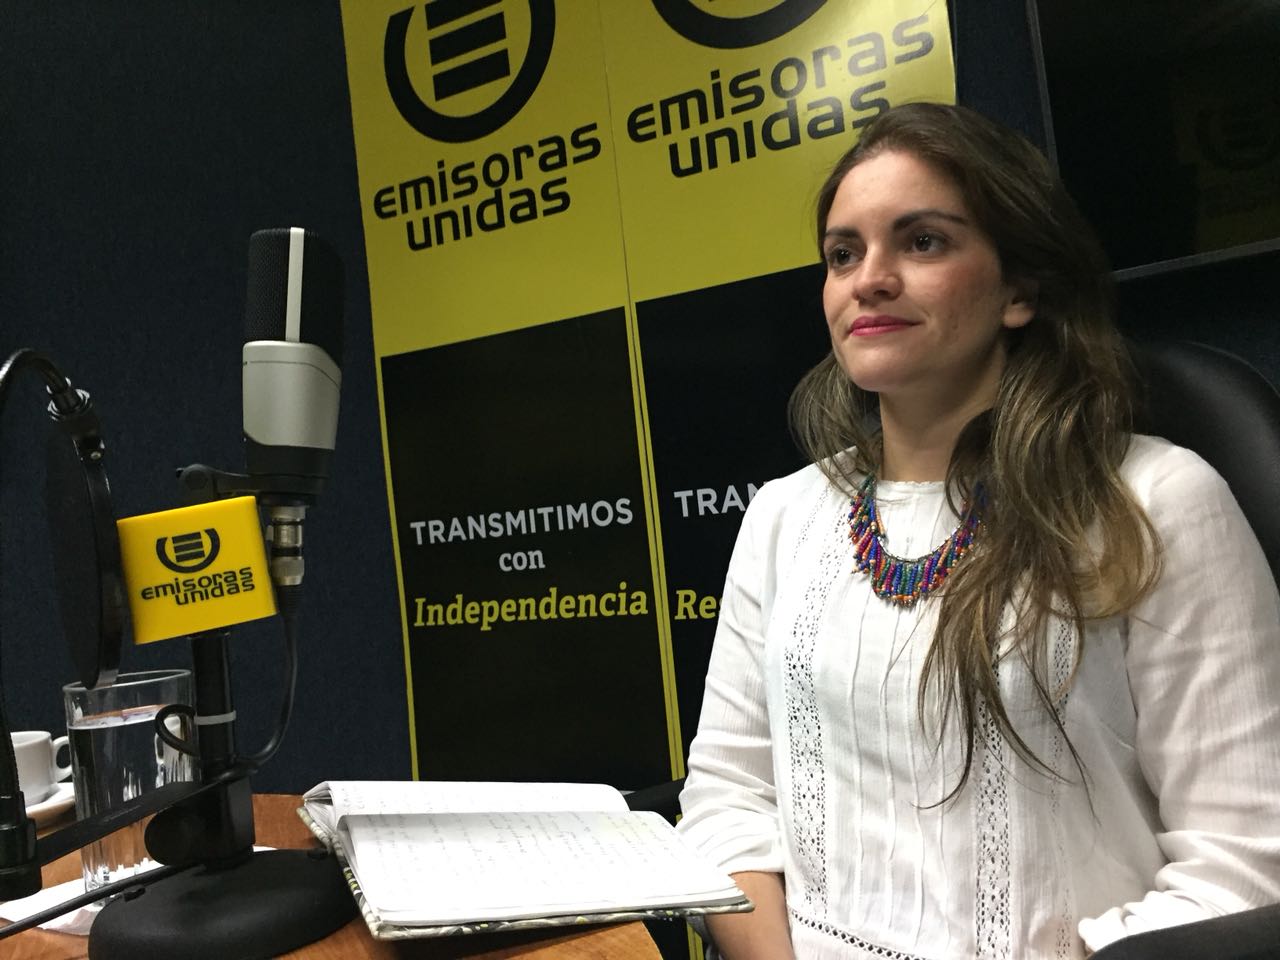 Celia Luna EU Emisoras Unidas Guatemala